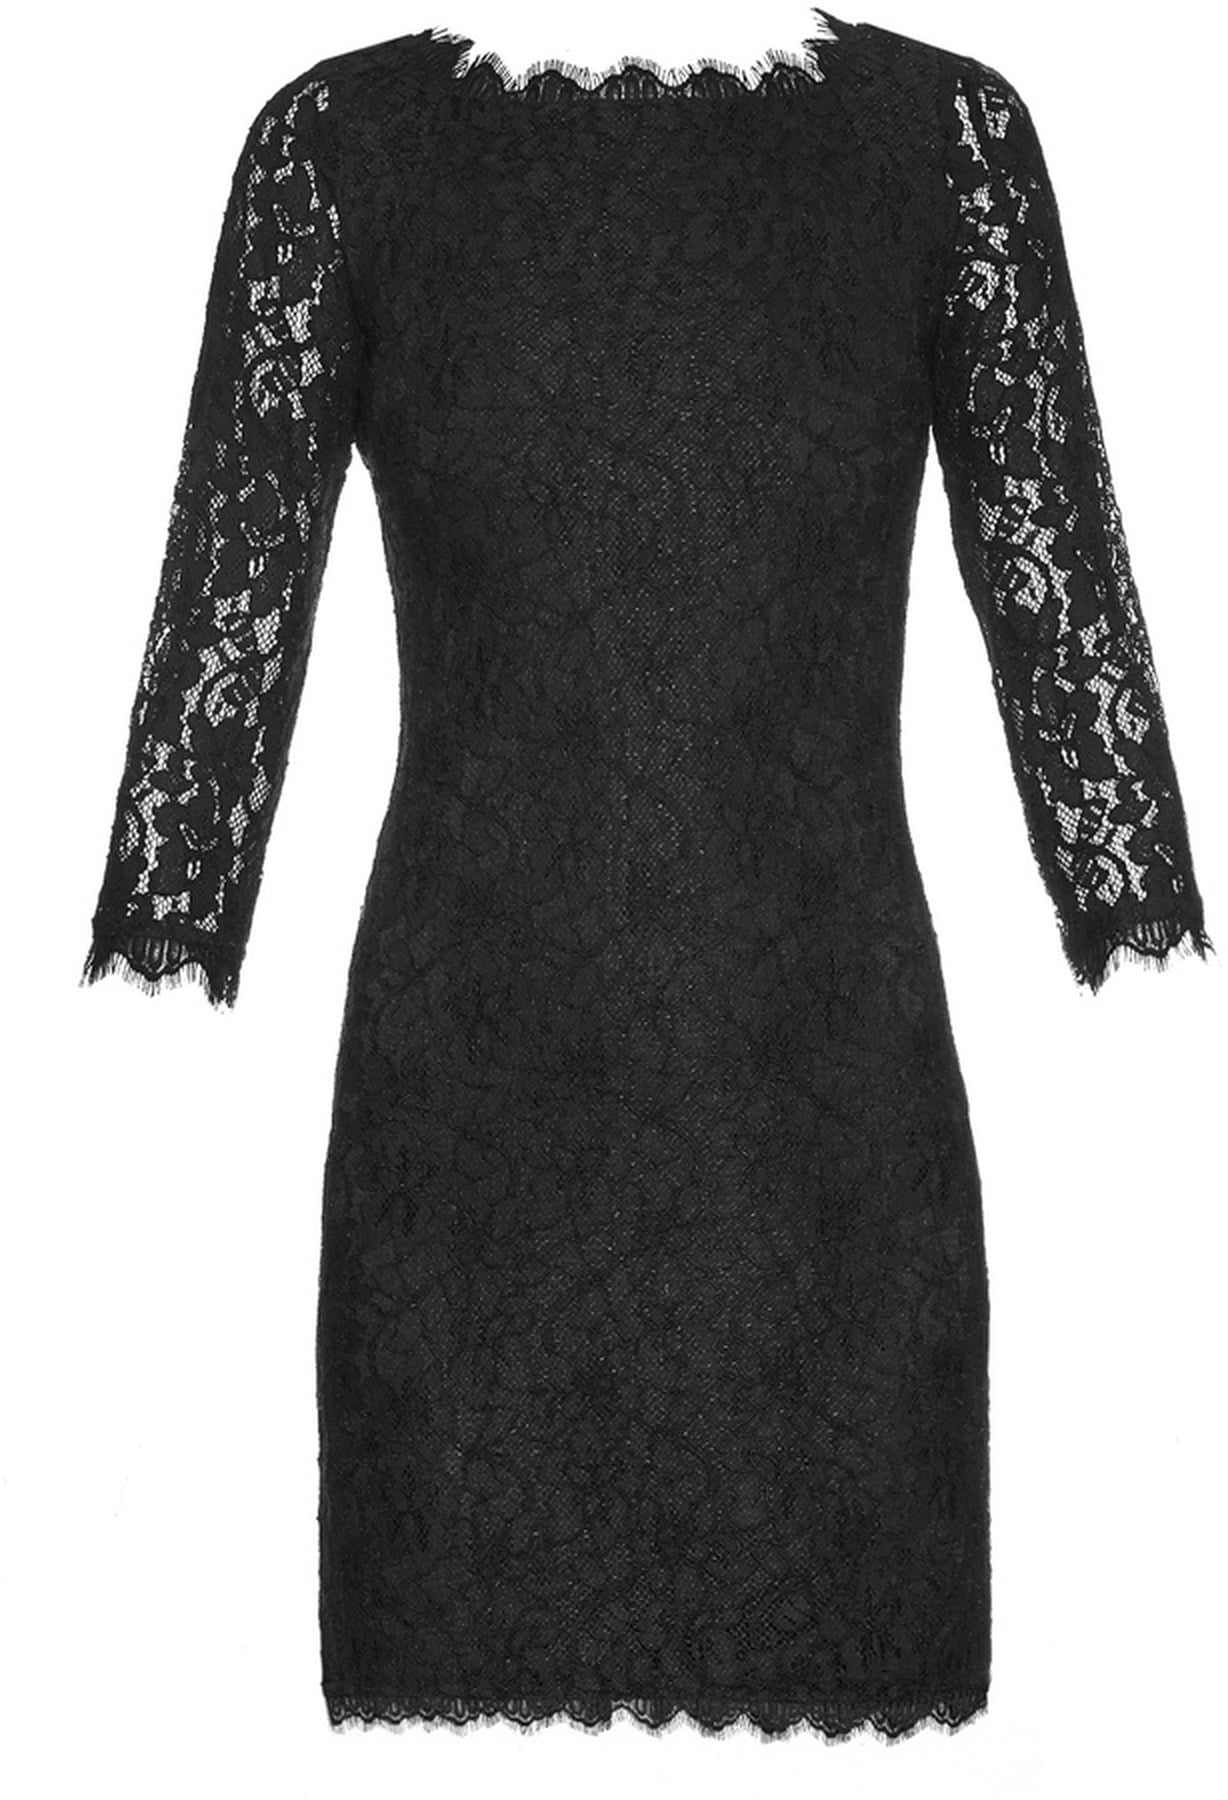 Kate Middleton's Black Lace Diane von Furstenberg Dress | POPSUGAR Fashion